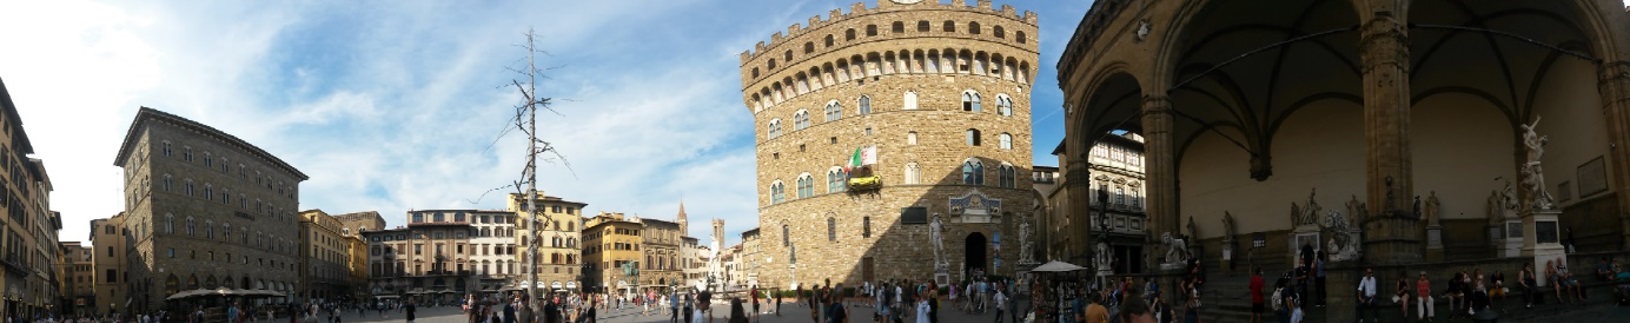 Florenz – Panorama am Piazza delle Signoria